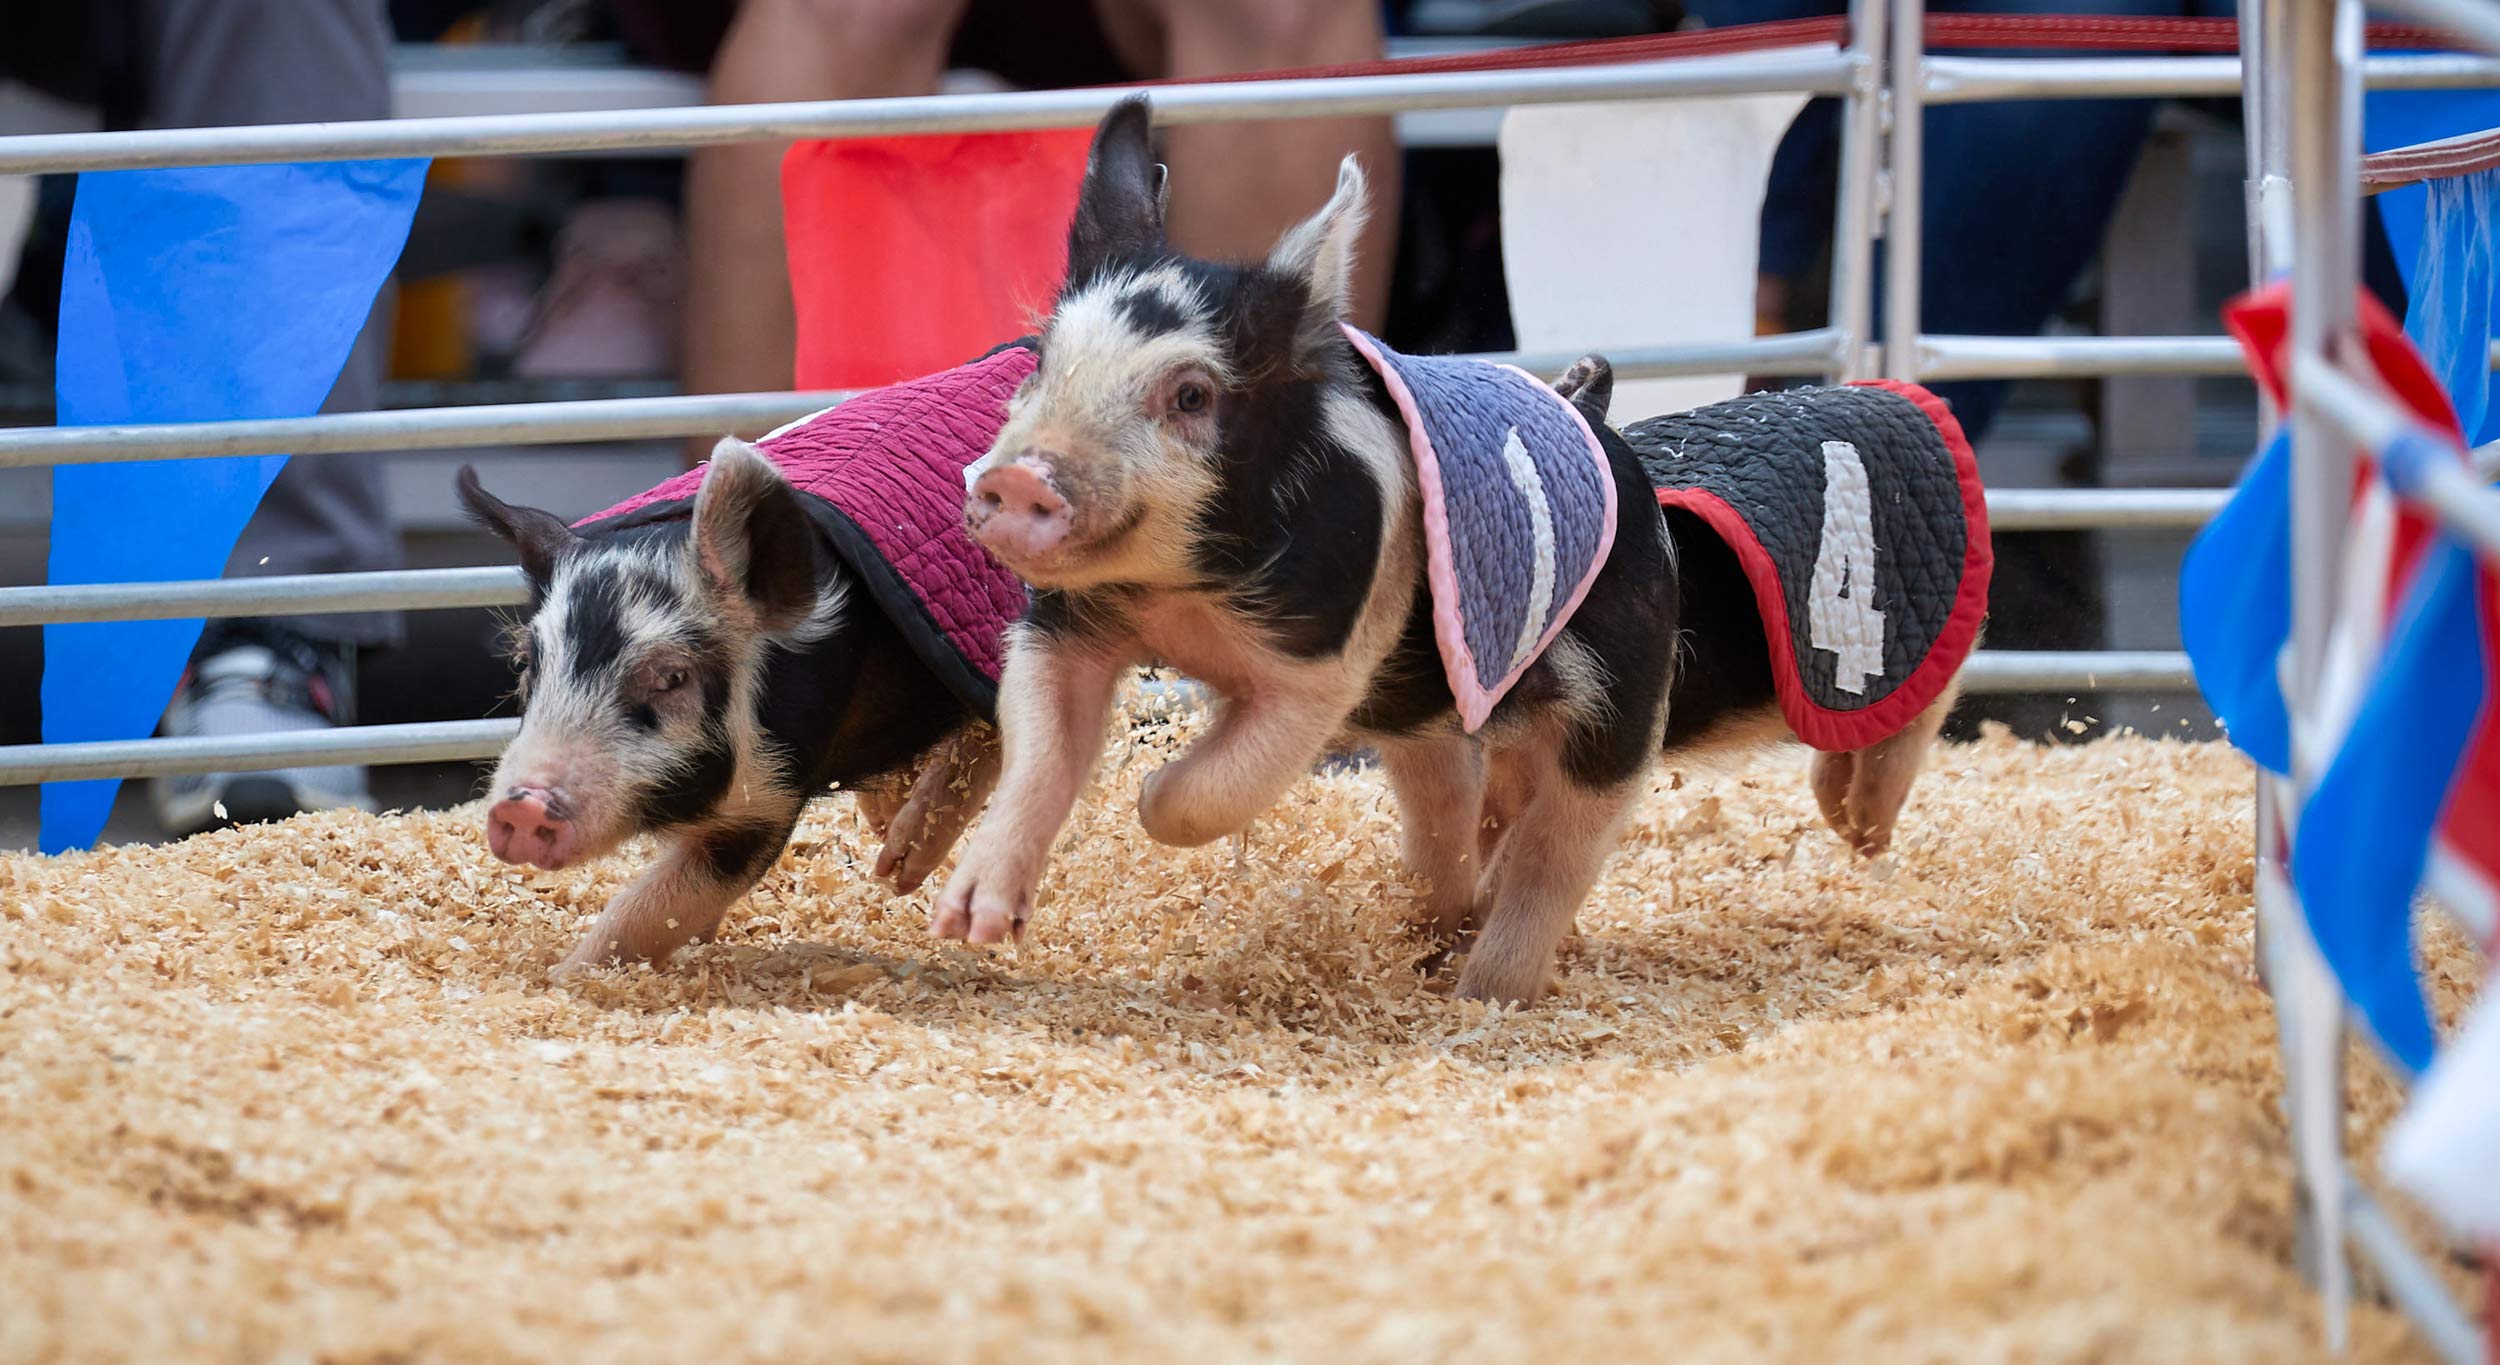 Swifty Swine Pig Races